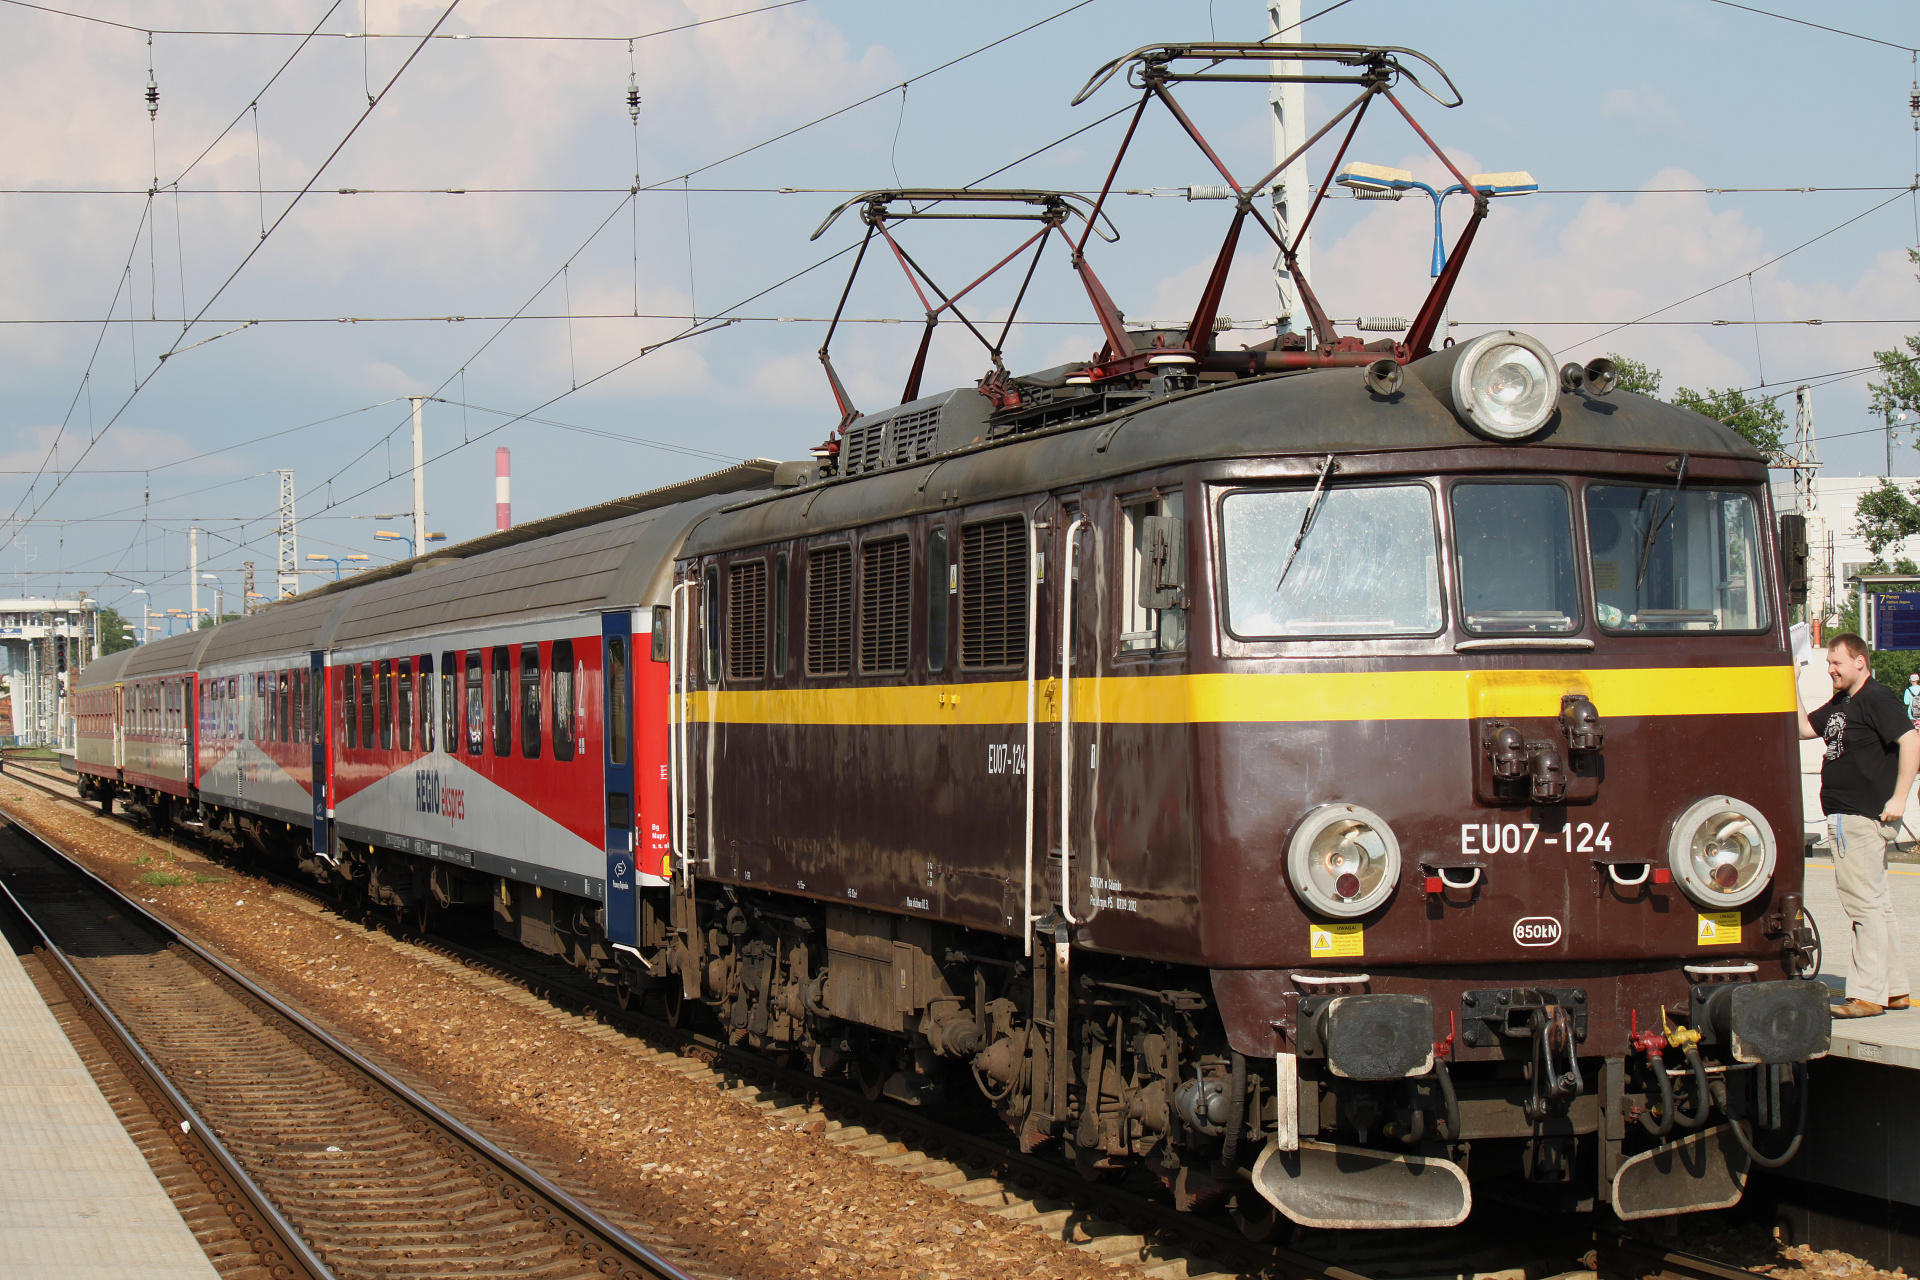 EU07-124 (Vehicles » Trains and Locomotives » Pafawag 4E)